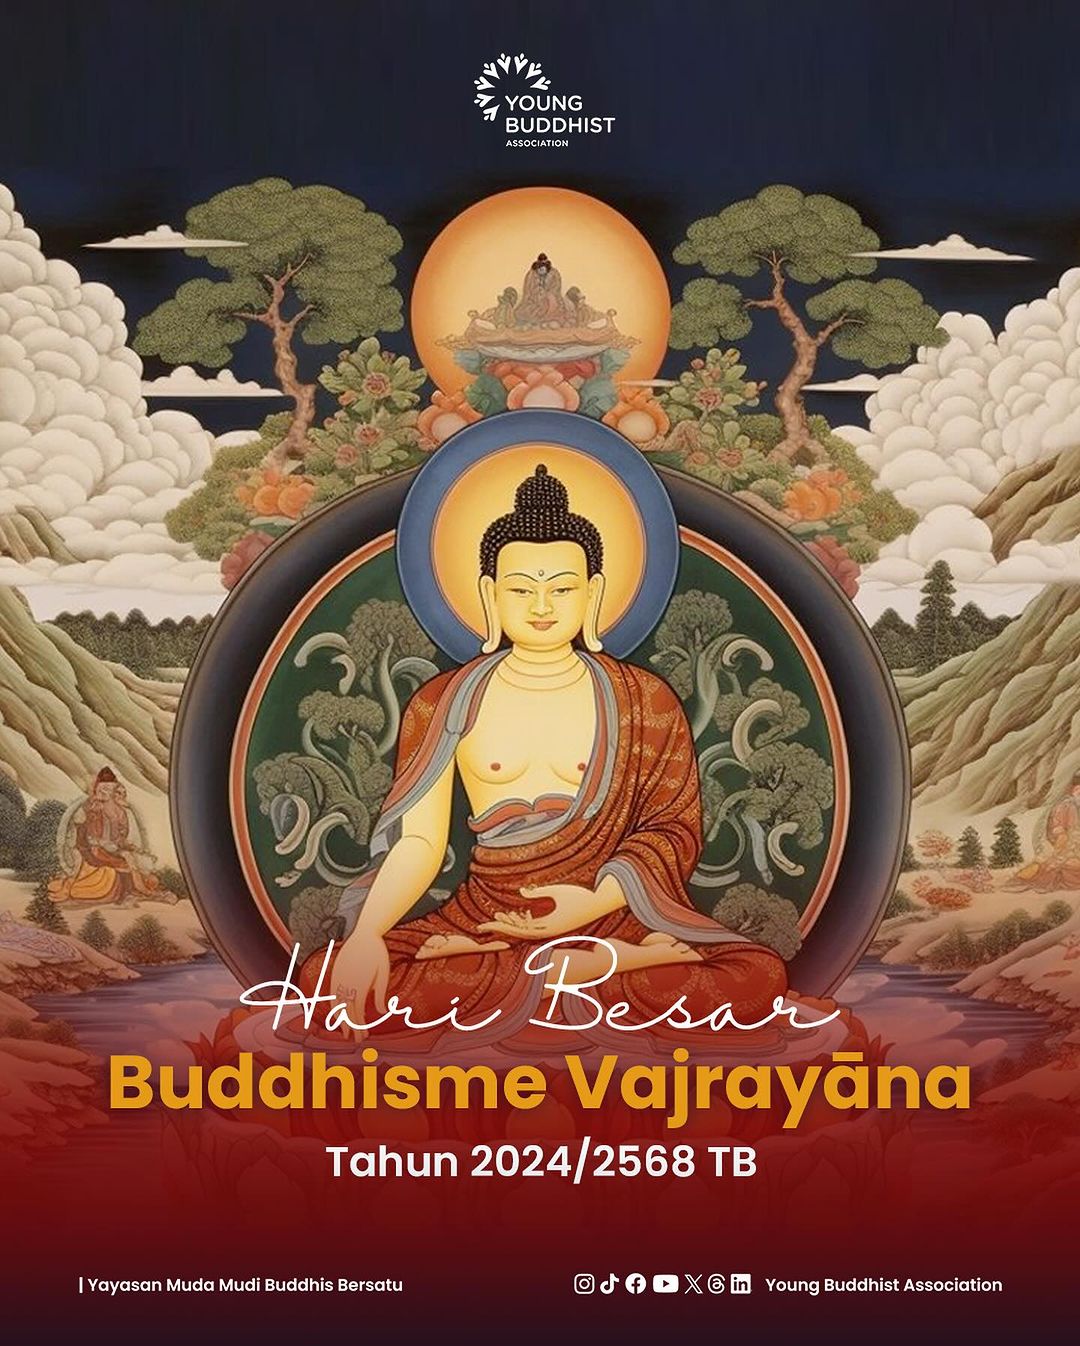 Hari Besar Buddhisme Vajrayāna tahun 2024